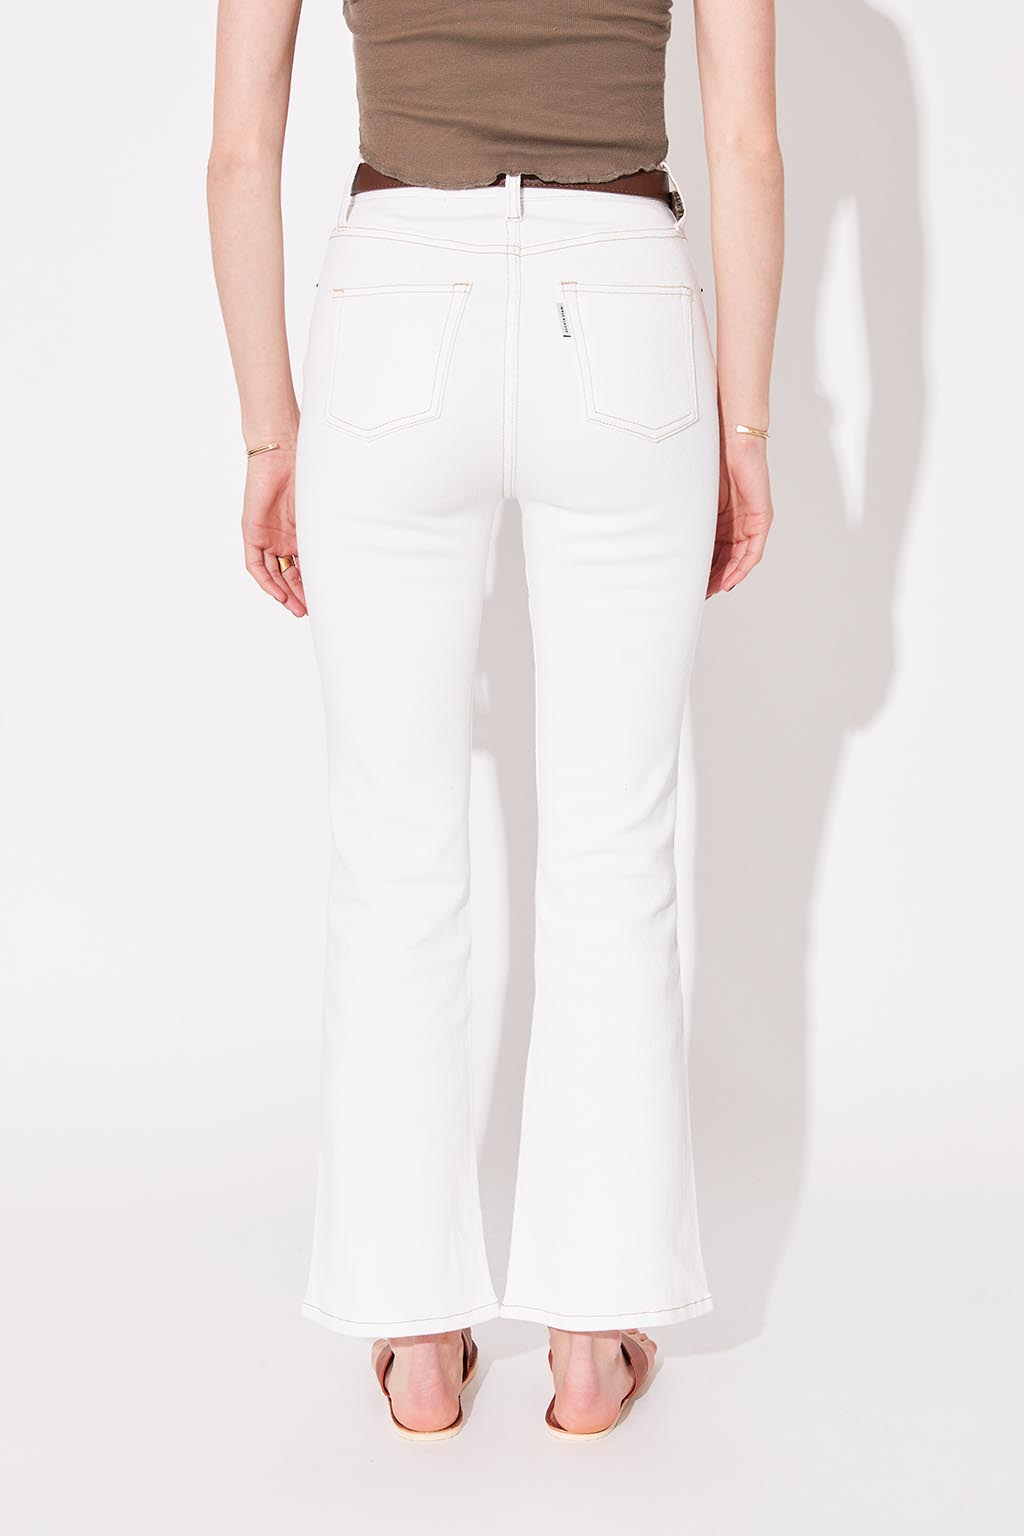 bootscut-pants-white-05